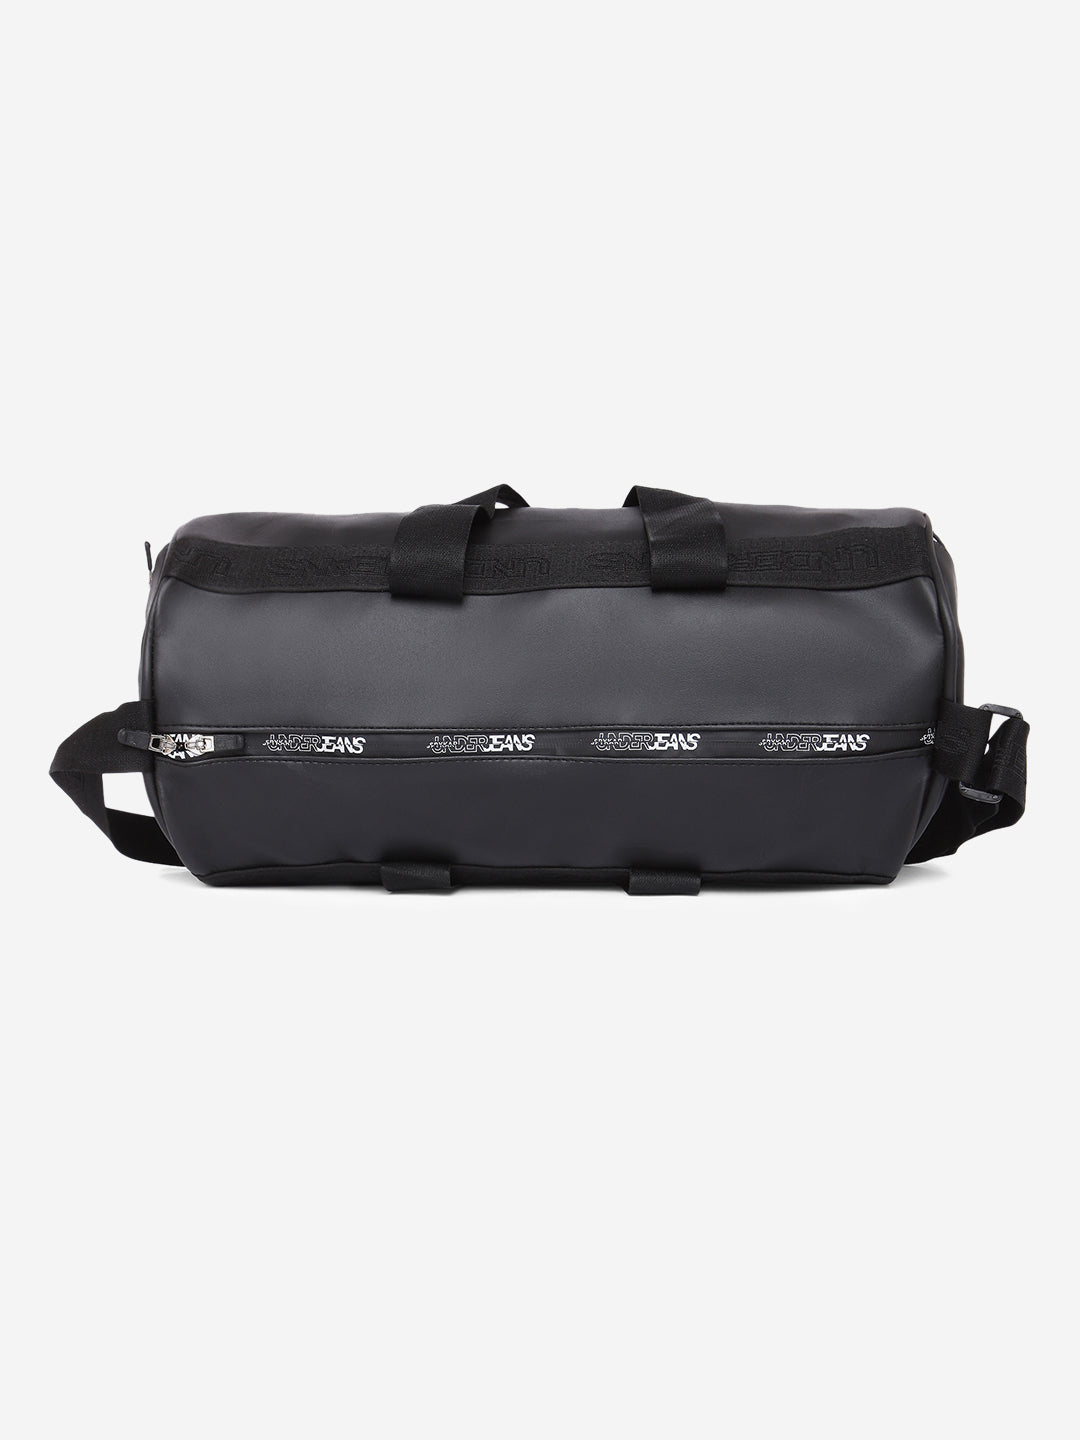 Buy F Gear Black Medium Duffle Bag Online At Best Price @ Tata CLiQ